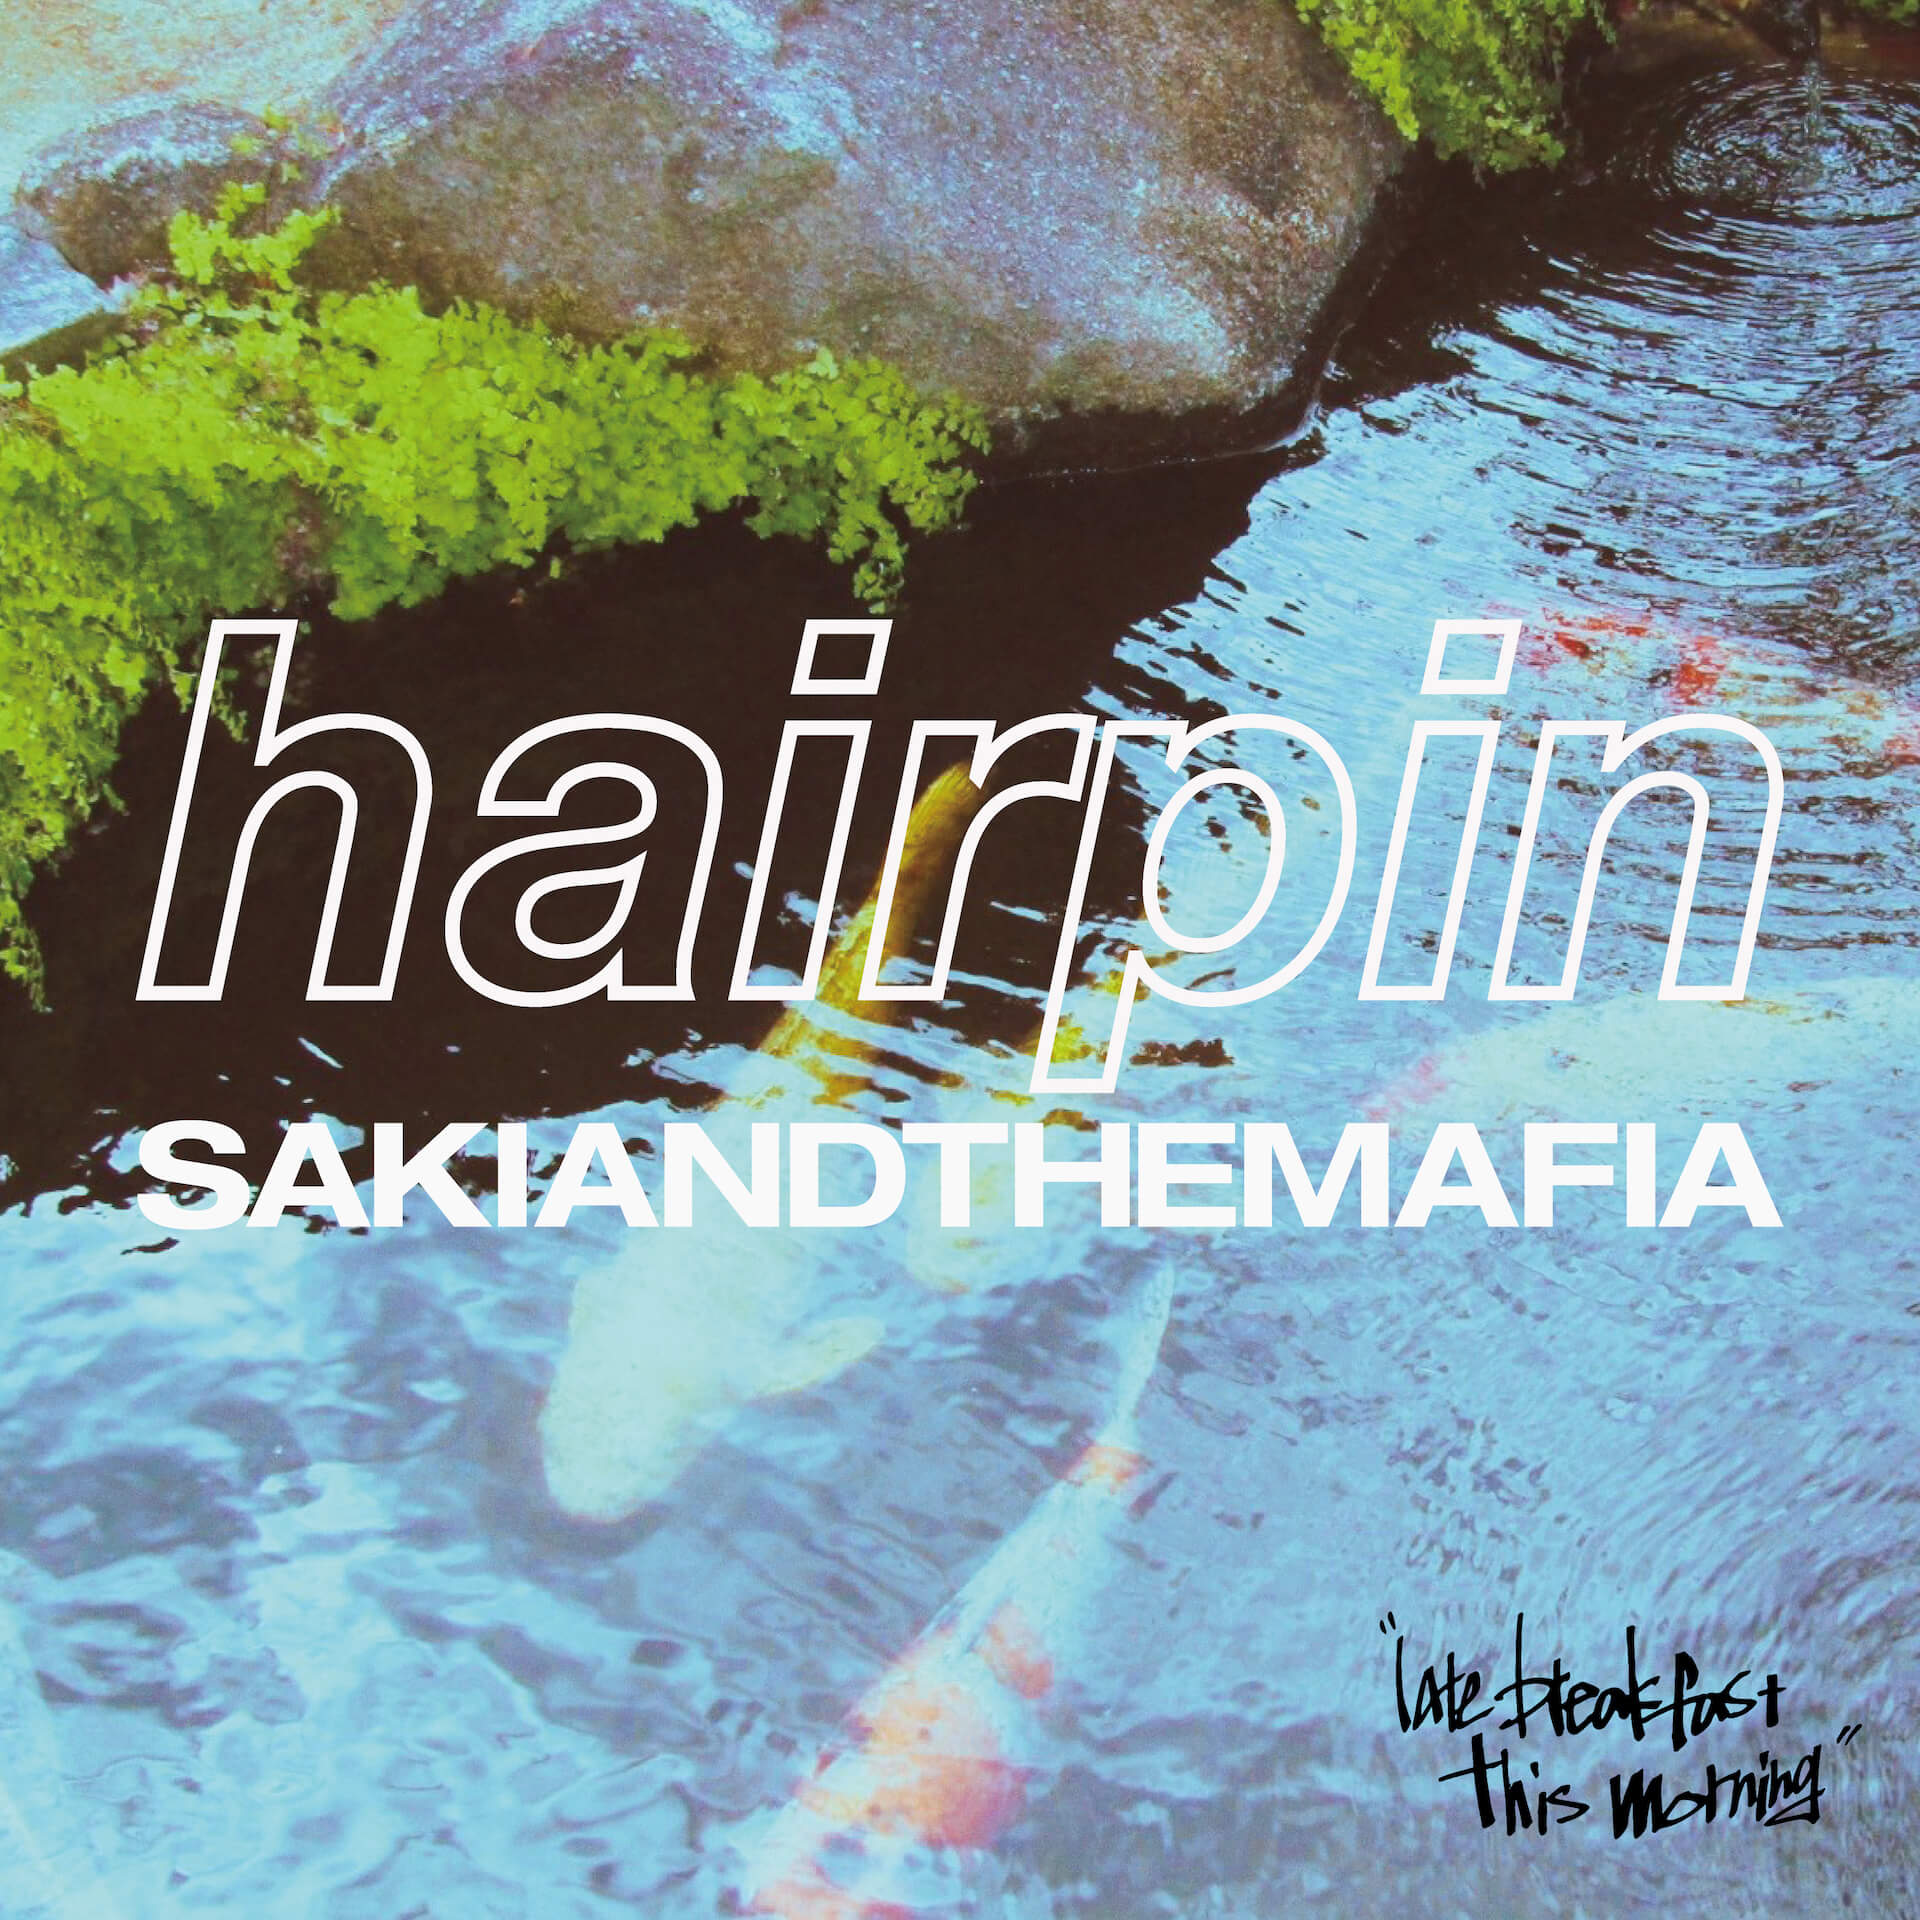 Saki Ideshimaが指揮をとるSAKIANDTHEMAFIAが始動、名義初となる新曲「hairpin」をリリース｜仲間と運営するレーベル〈late breakfast this morning〉よりリリース music240213-sakiandthemafia1